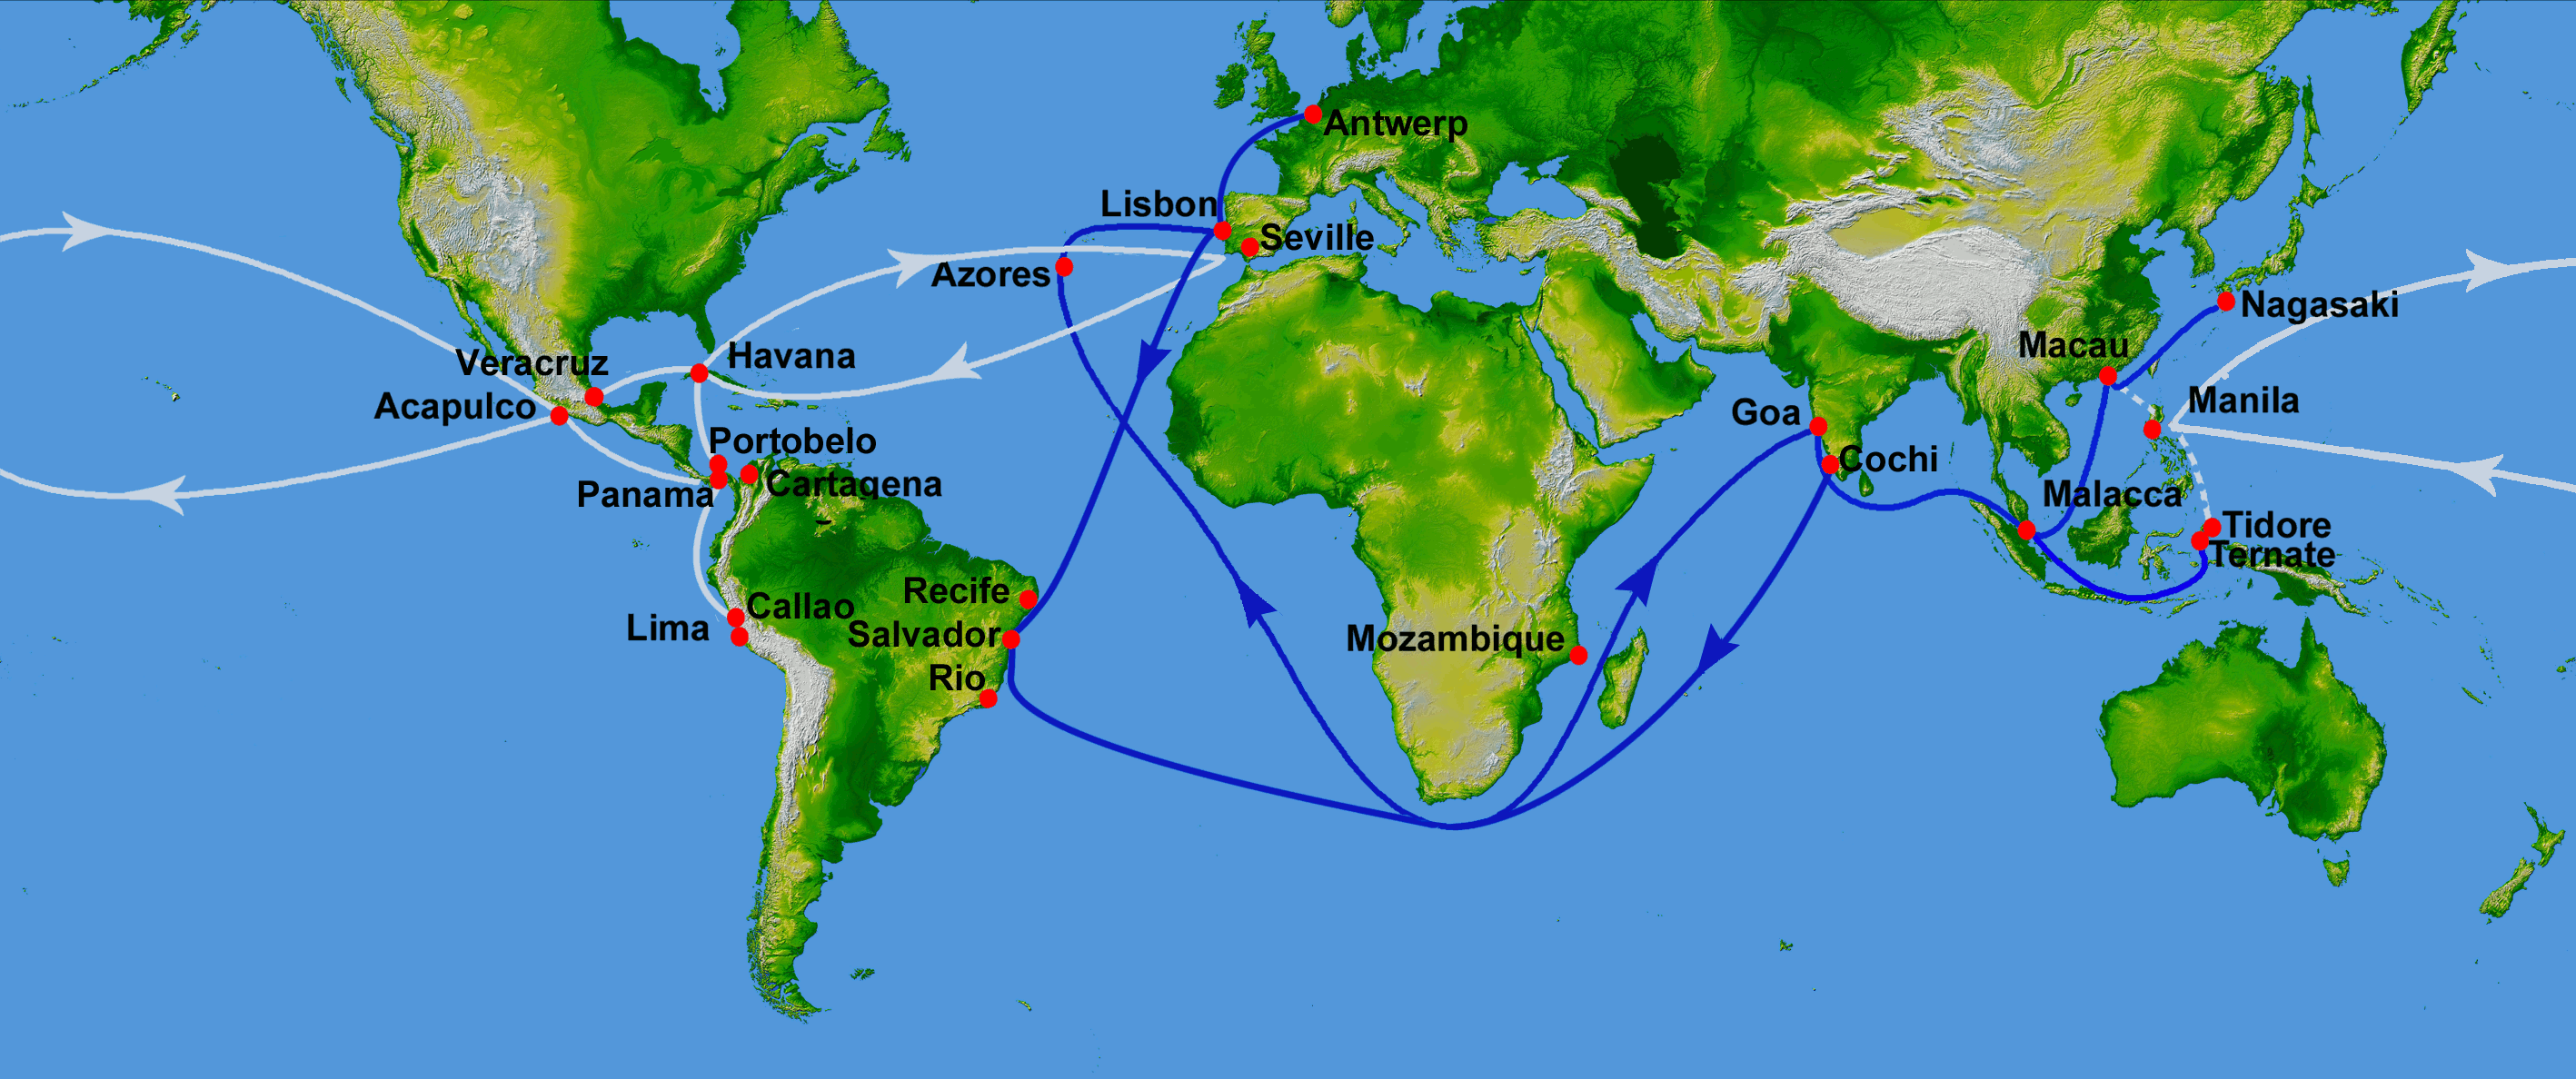 world trade flow map